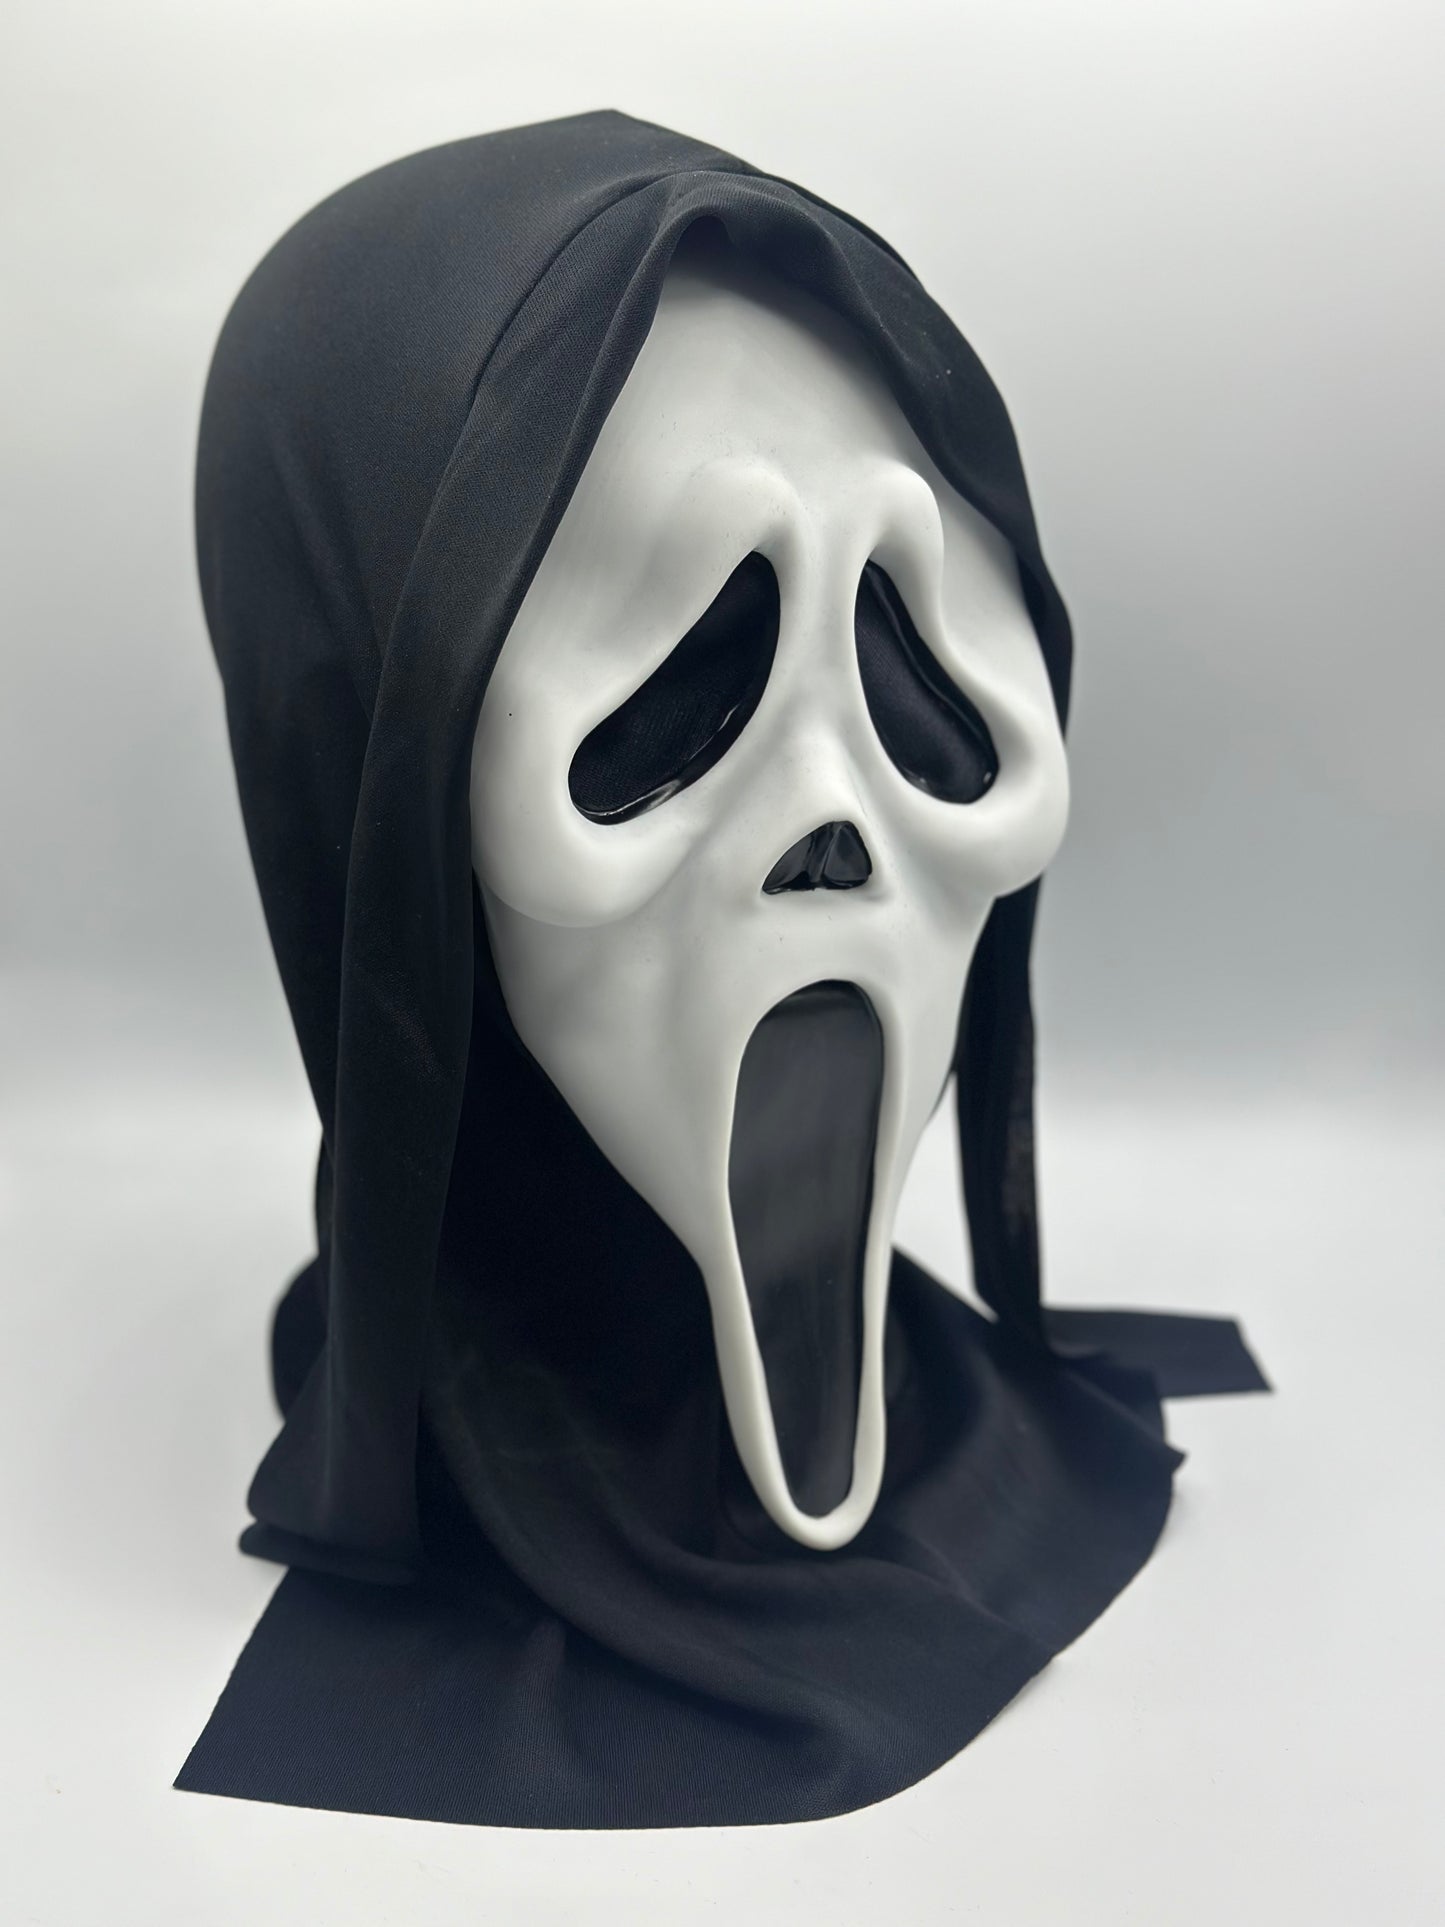 Scream mask, Ghostface mask from the scream movie